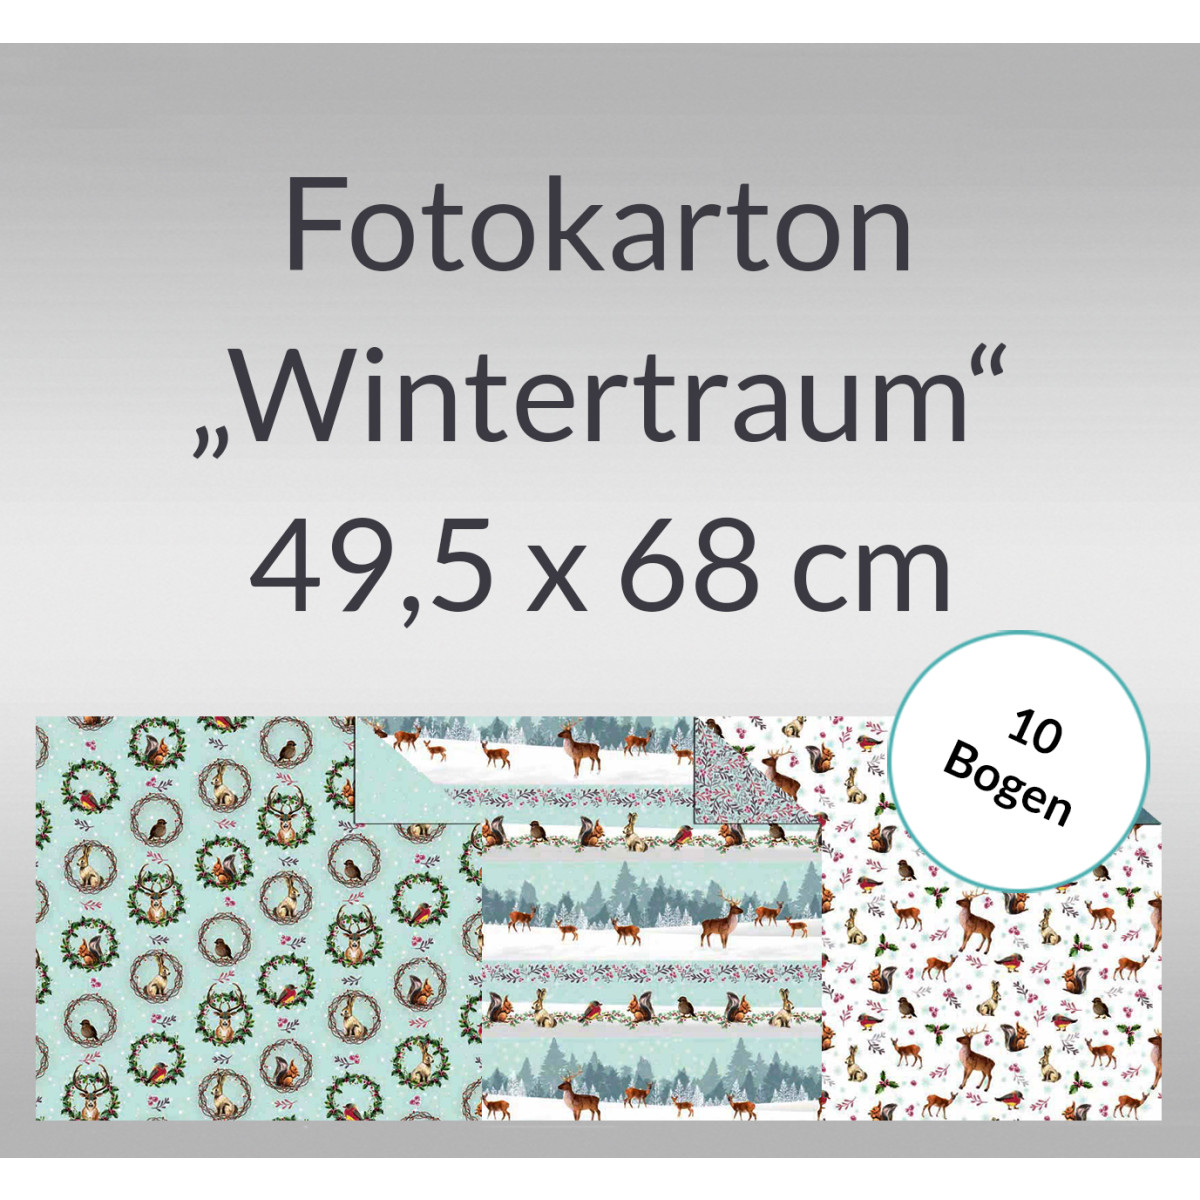 Fotokarton "Wintertraum" 49,5 x 68 cm - 10 Blatt